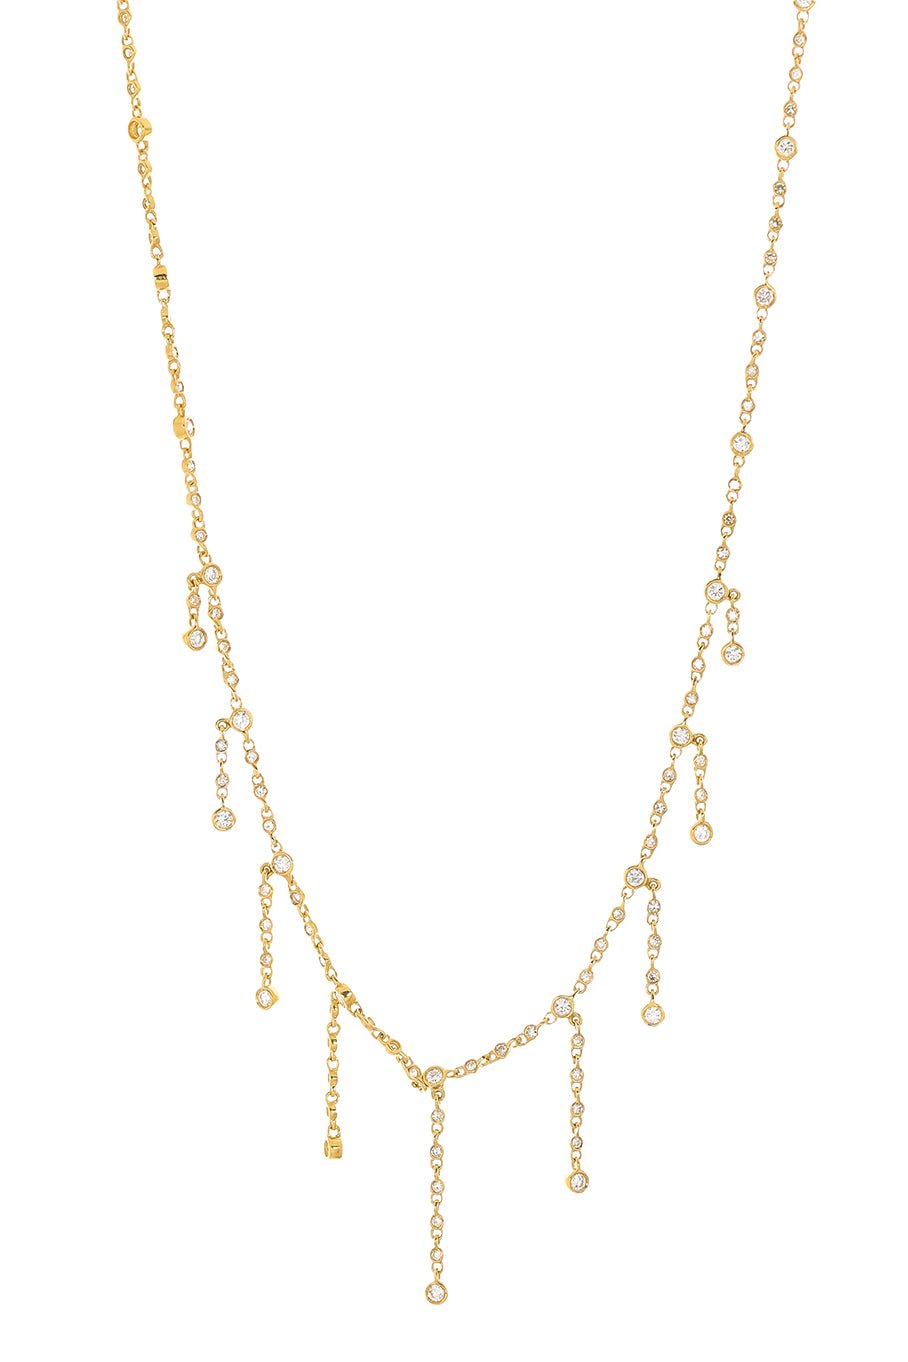 SHAY JEWELRY-Infinity Diamond Dangle Drop Necklace-YELLOW GOLD